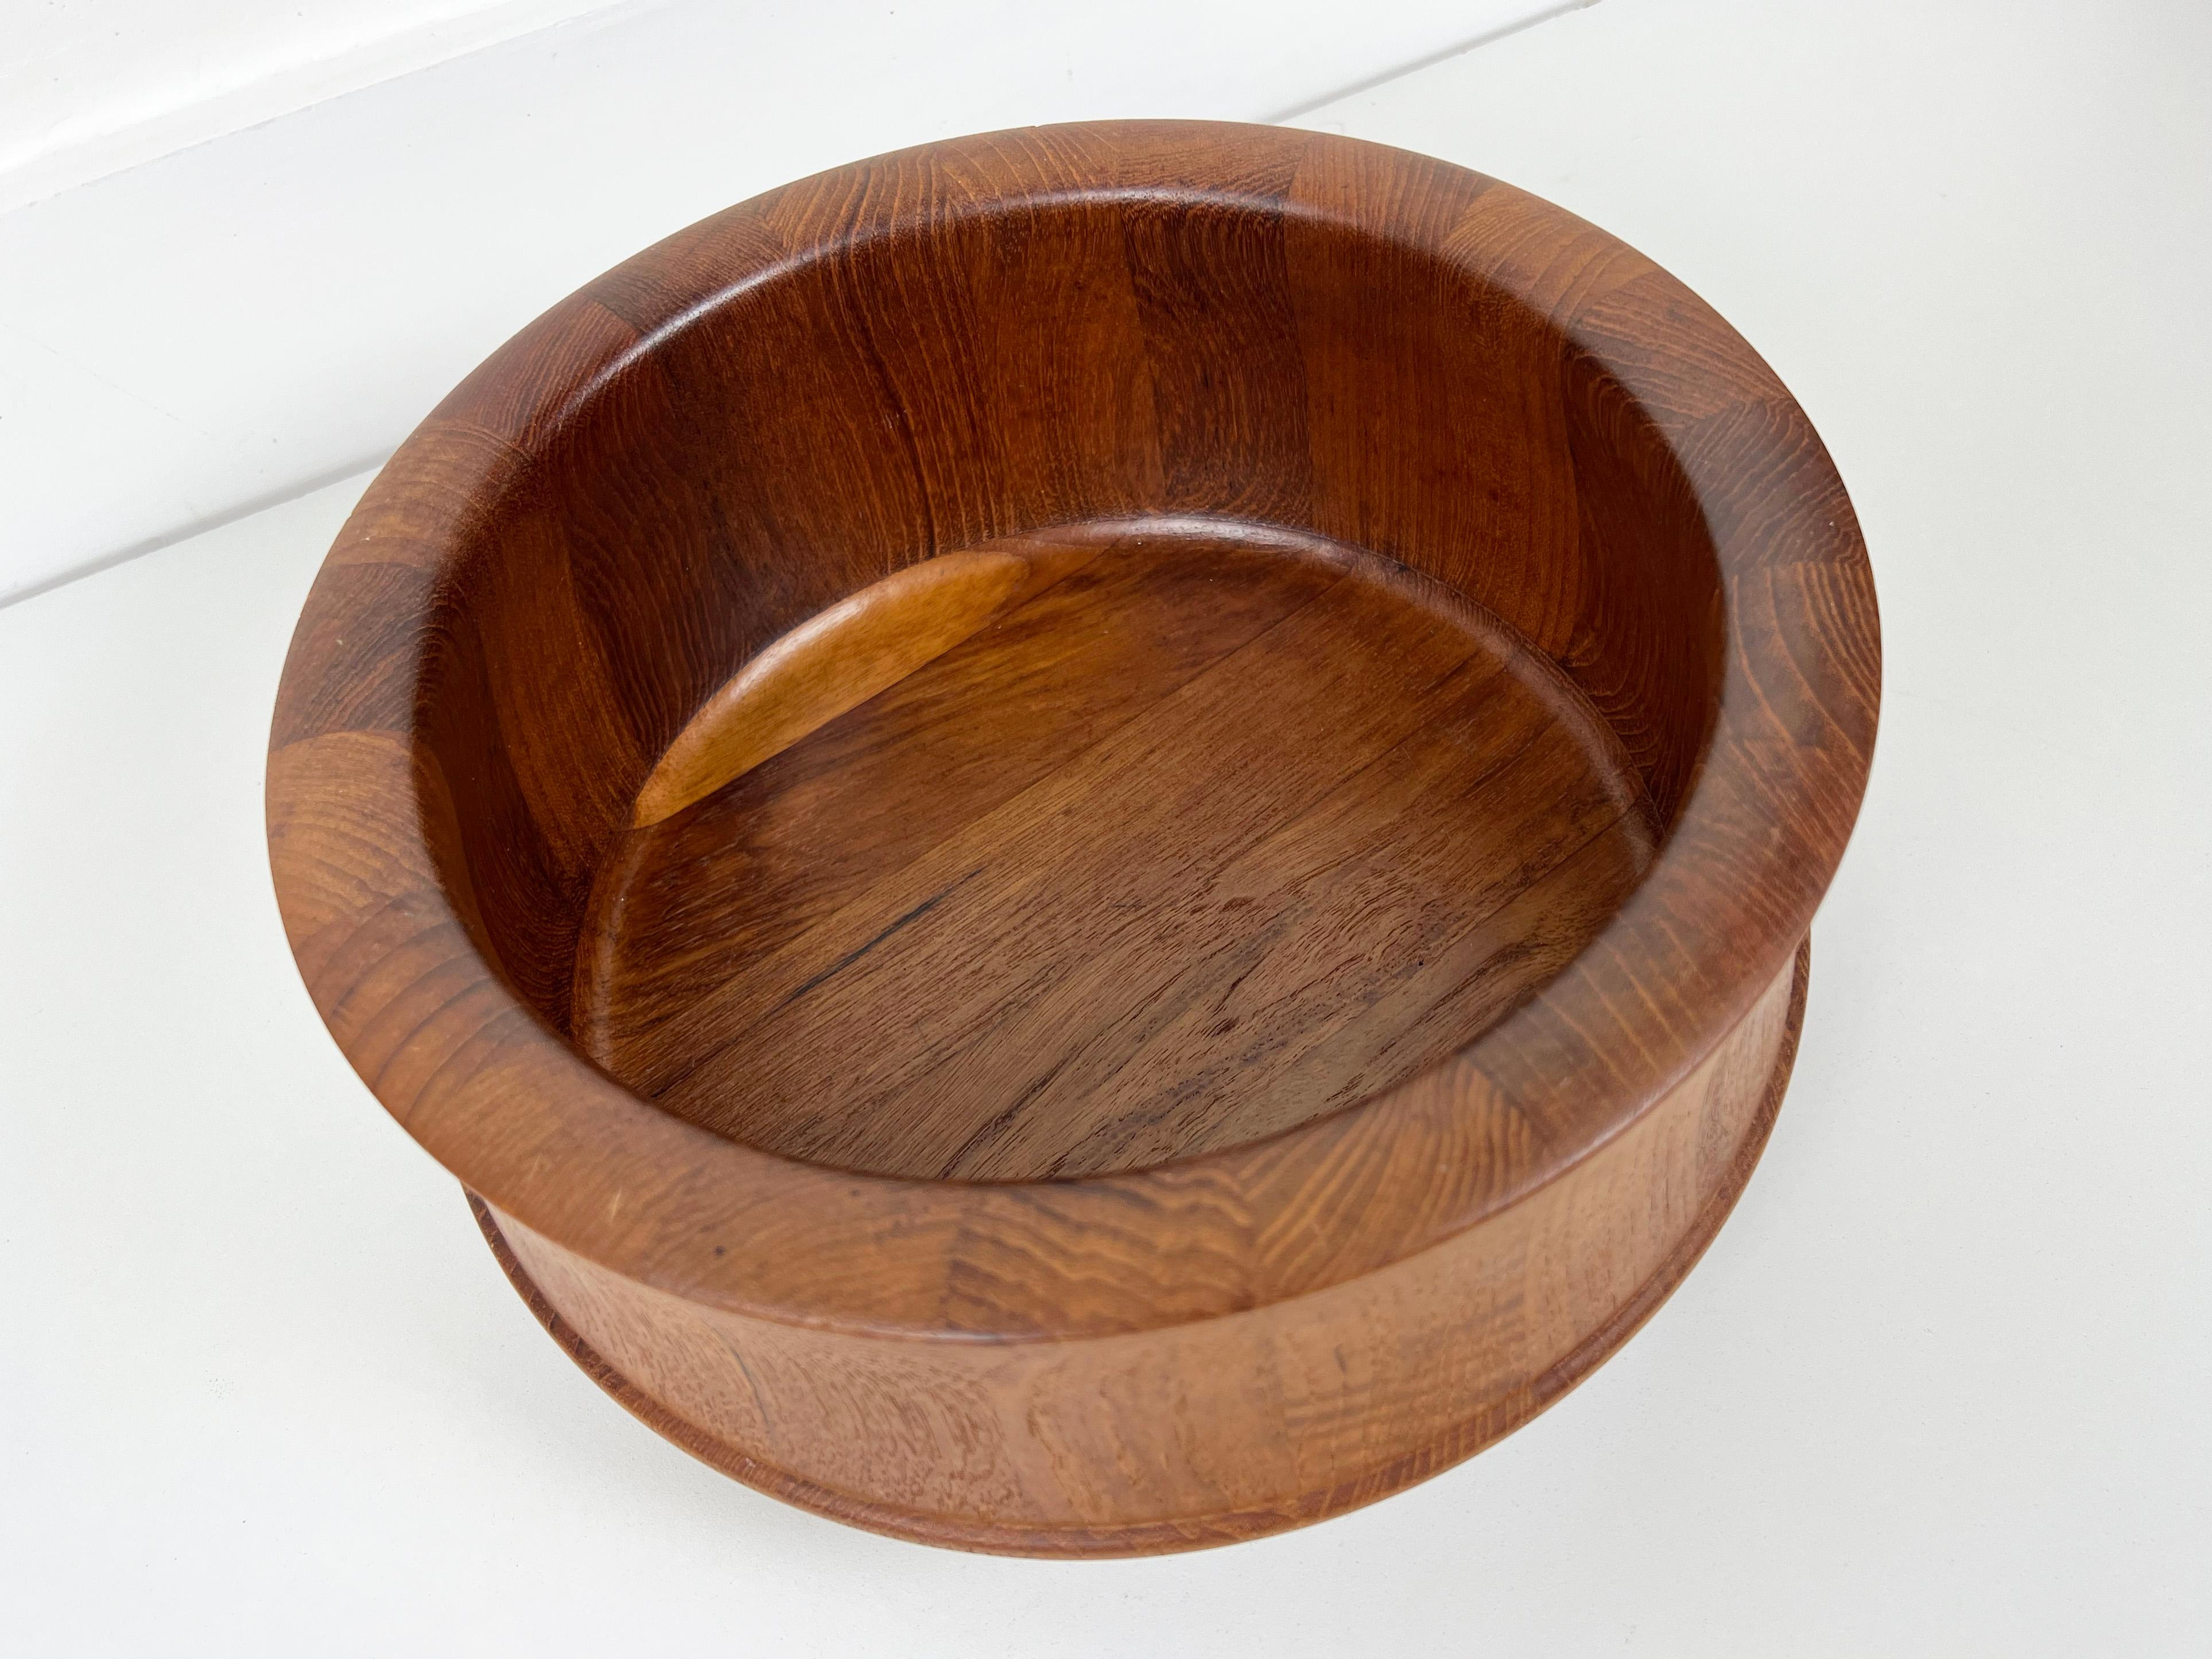 Large vintage danish teak bowl by Nissen. 

Designer: Richard Nissen

Manufacturer: Nissen Studios

Year: 1960s

Origin: Denmark

Dimensions: 5